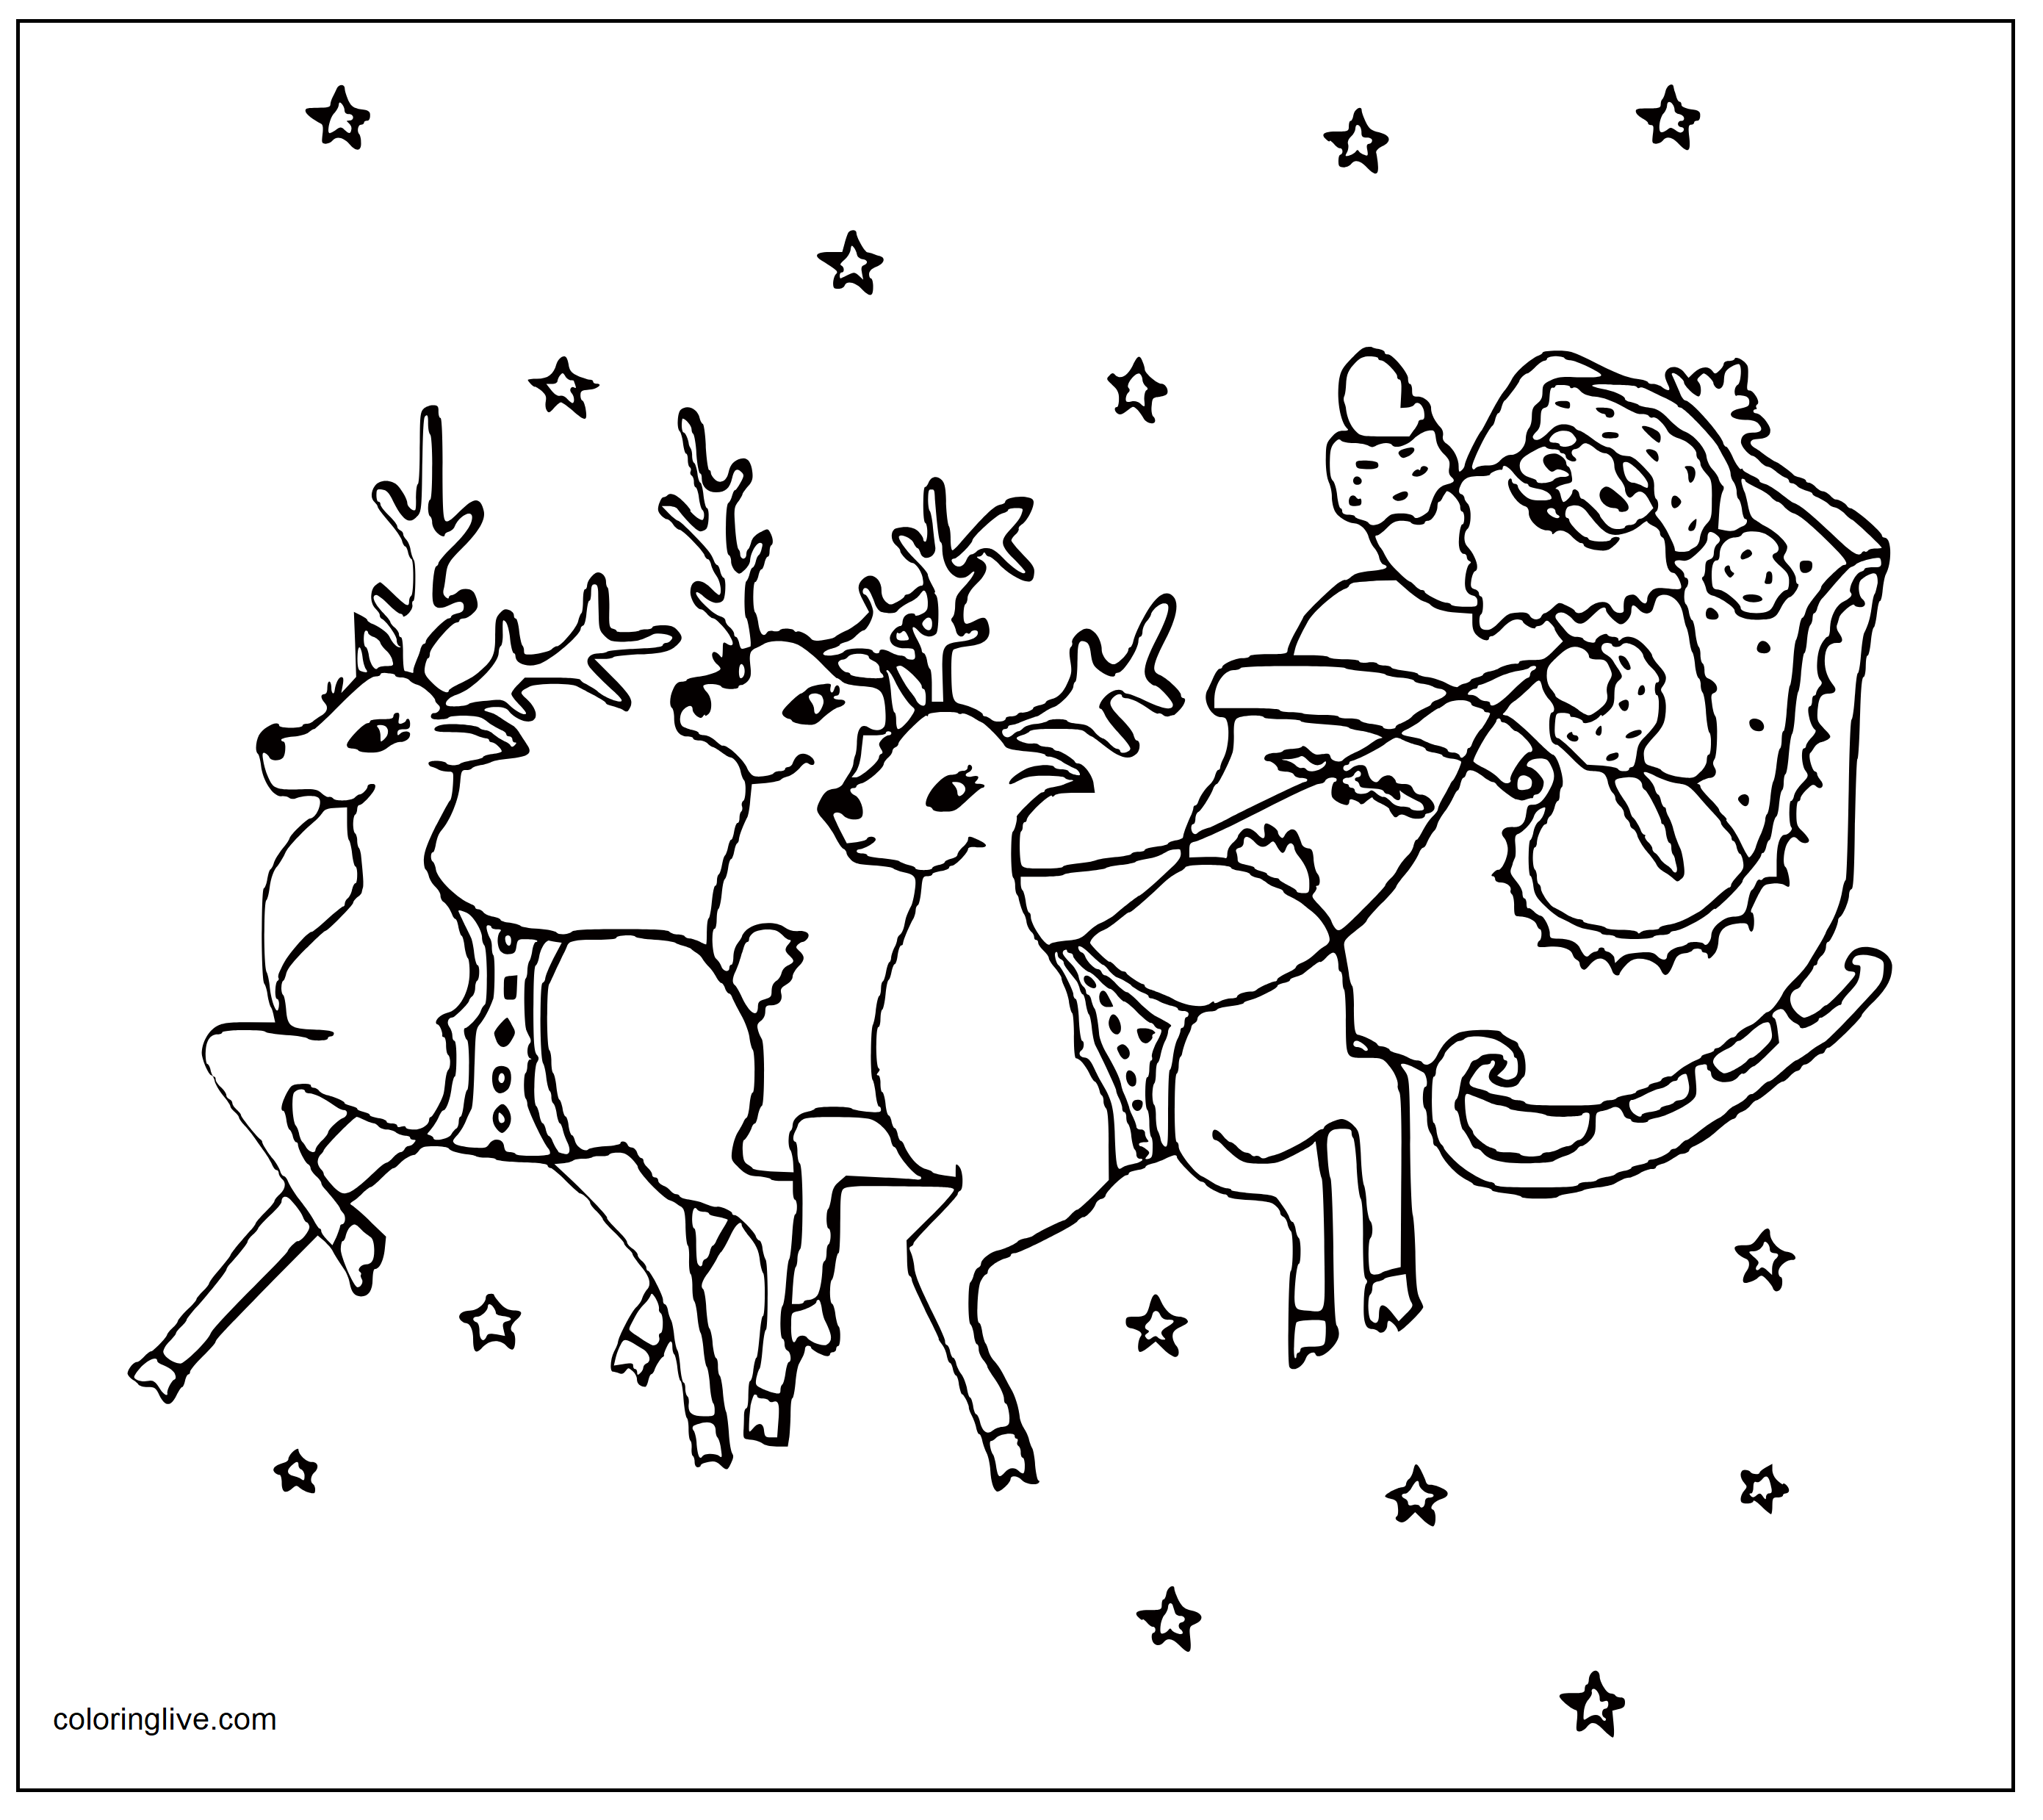 Printable santa and reindeers Coloring Page for kids.